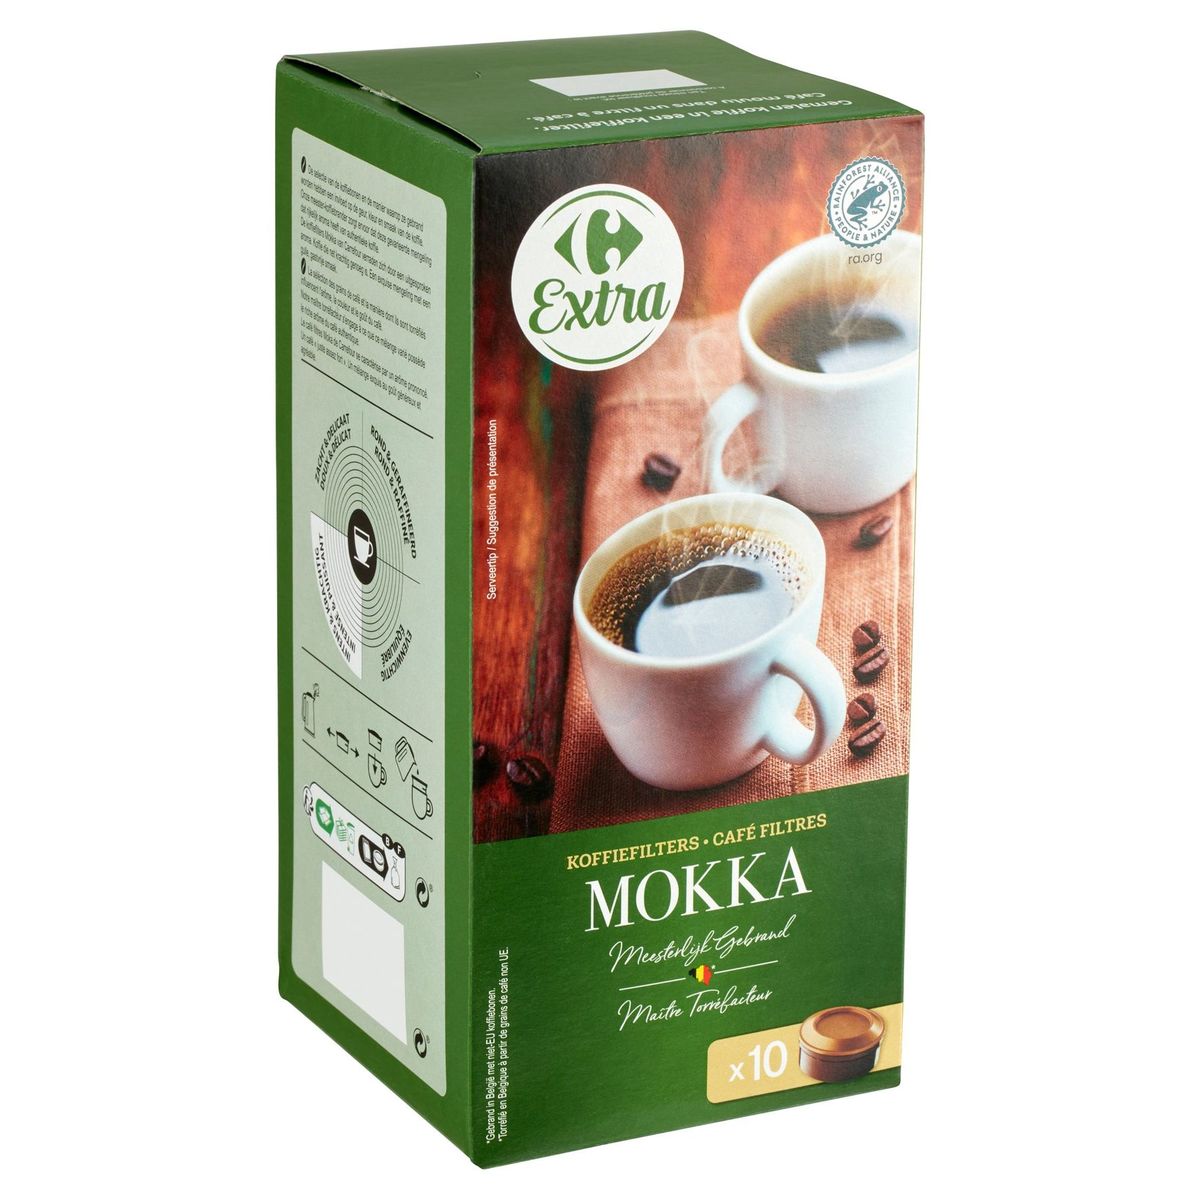 Carrefour Extra Koffiefilters Moka 10 Stuks 75 g